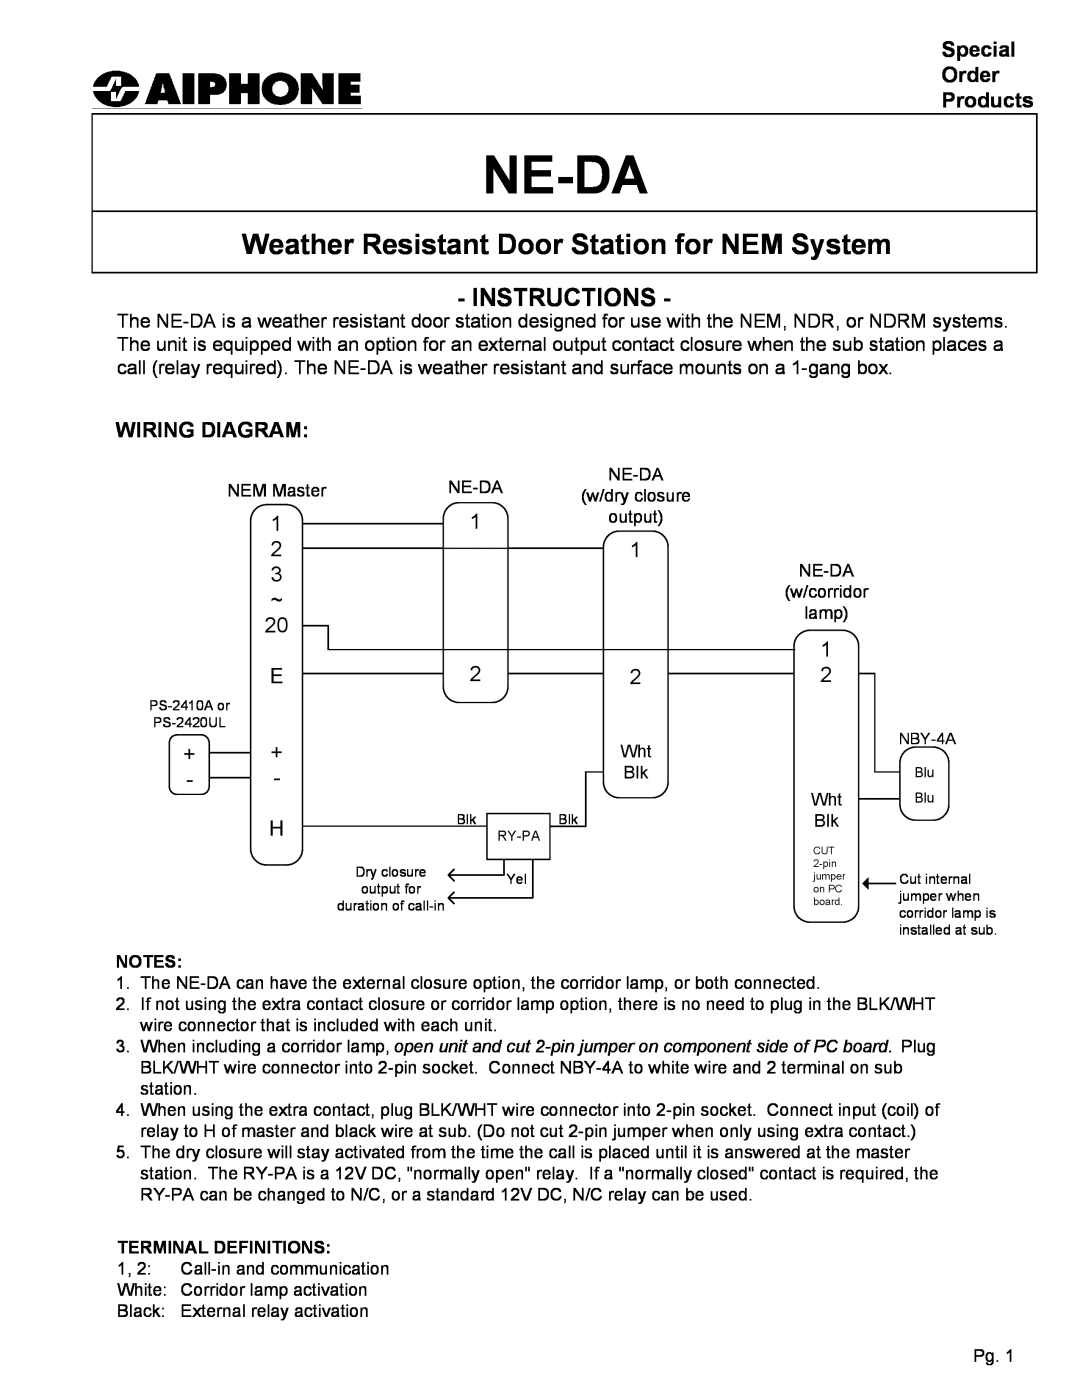 Aiphone NE-DA manual Special Order Products, Wiring Diagram, Ne-Da, Weather Resistant Door Station for NEM System 